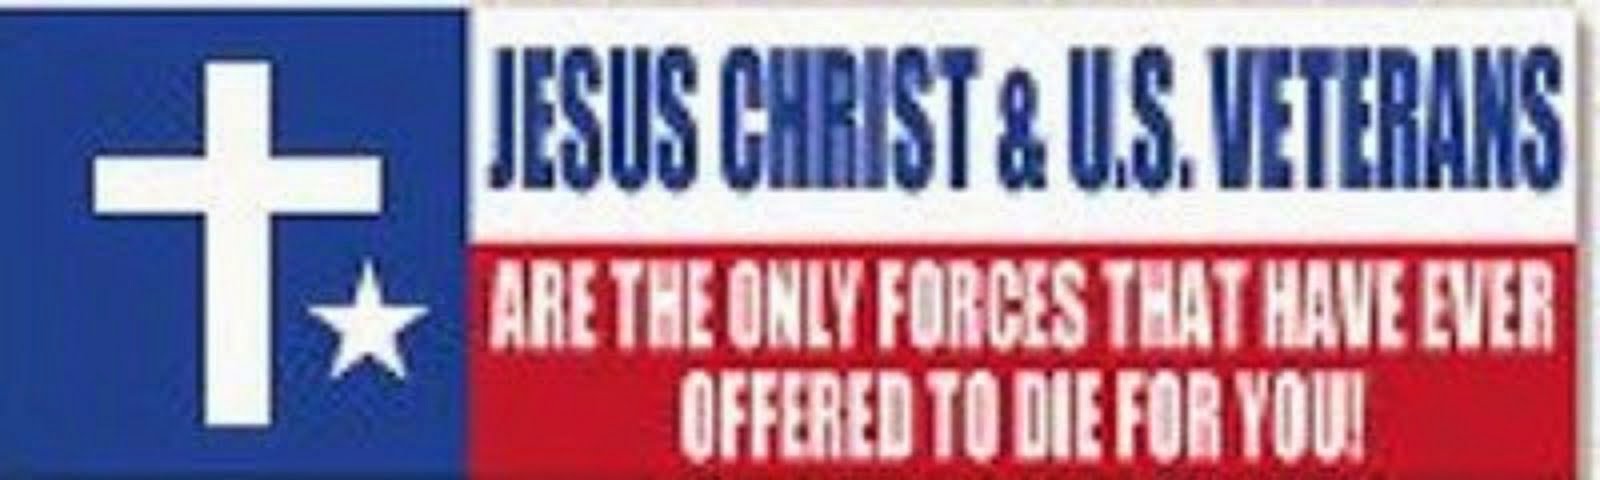 JESUS CHRIST AND THE U.S. VETERANS